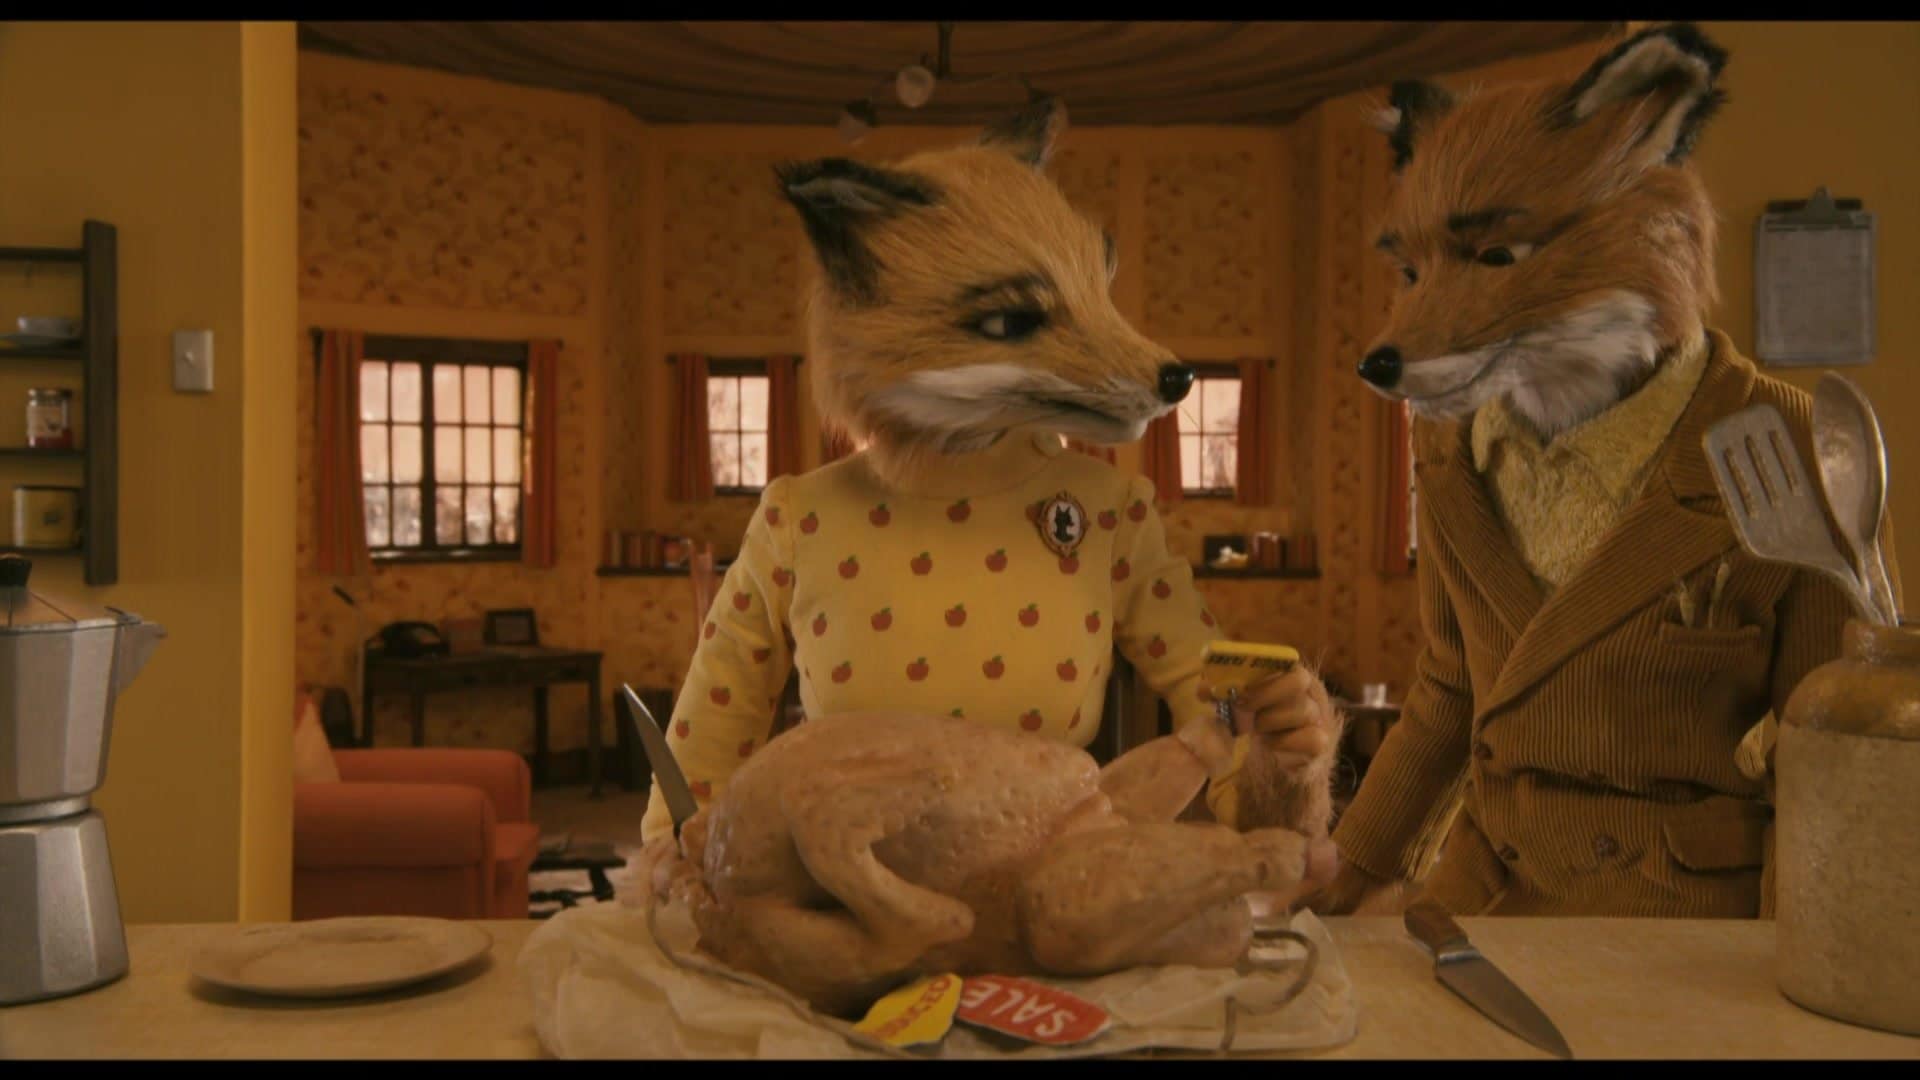 Fox см. Бесподобный Мистер Фокс. Бесподобный Мистер ФОК. Бесподобный Мистер Фокс (fantastic Mr. Fox), 2009. Мистер Лис Уэс Андерсон.